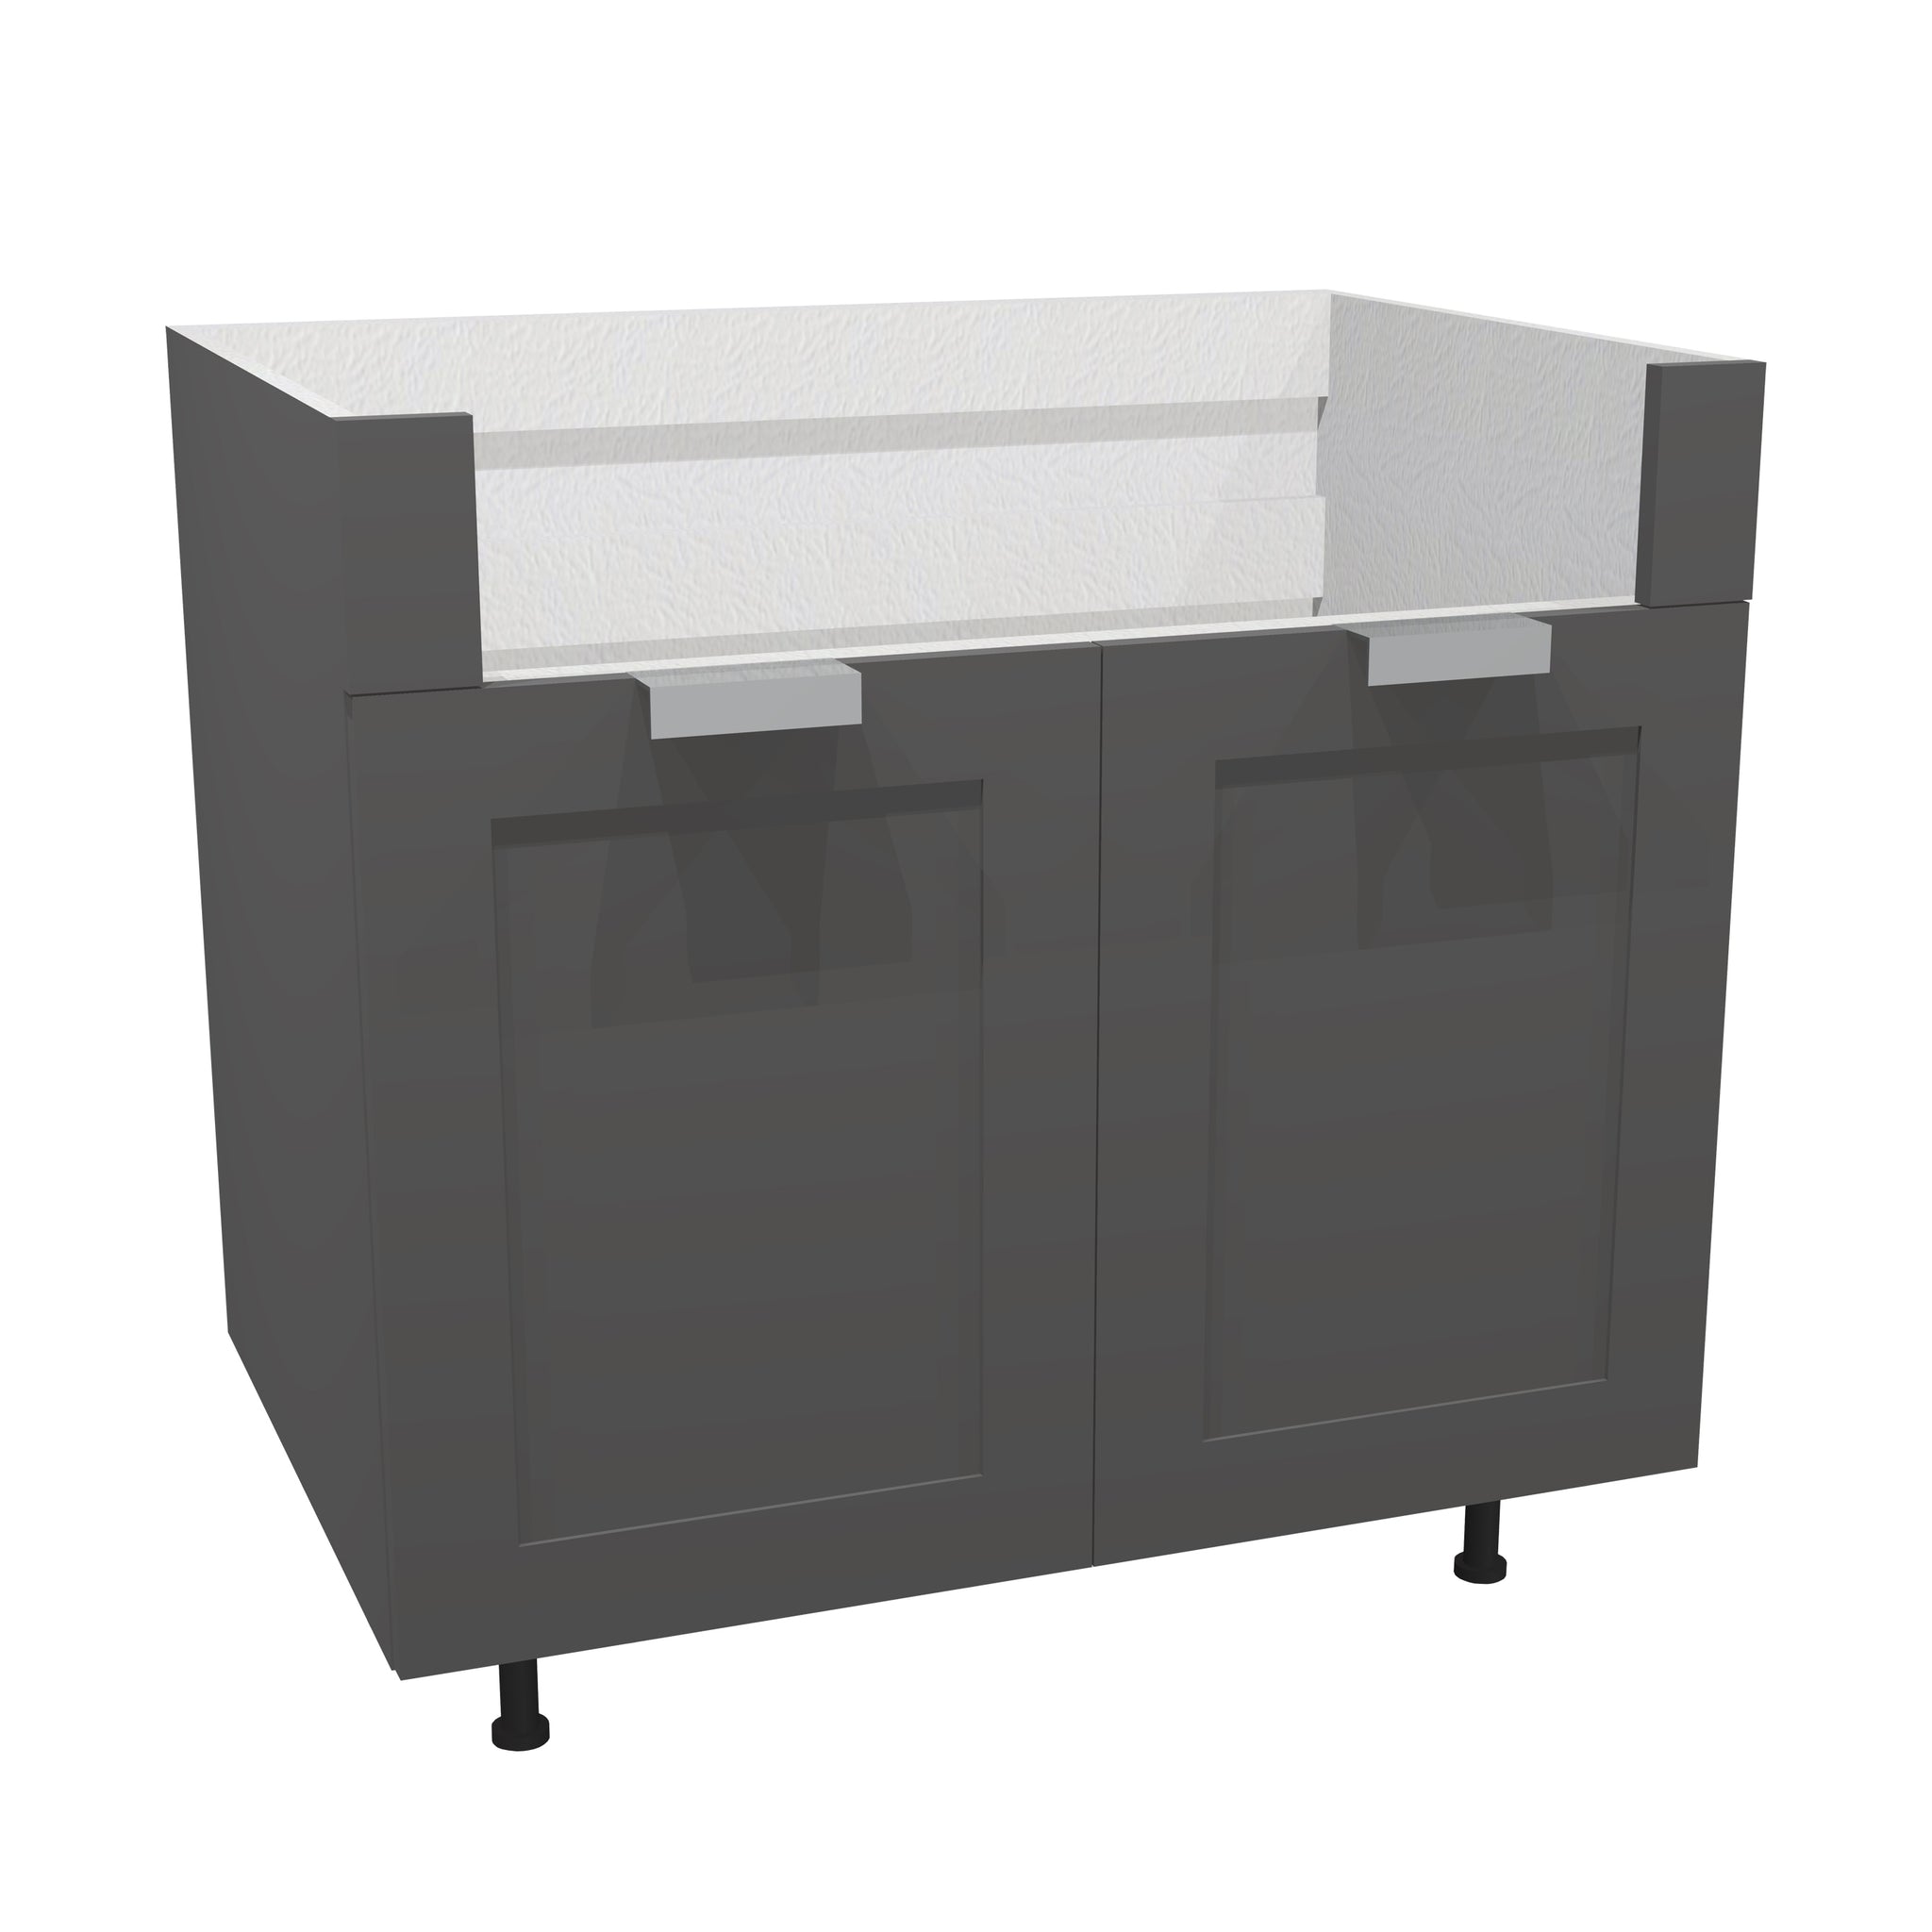 RTA - Grey Shaker - Farm Sink Base Cabinet | 36"W x 30"H x 23.8"D